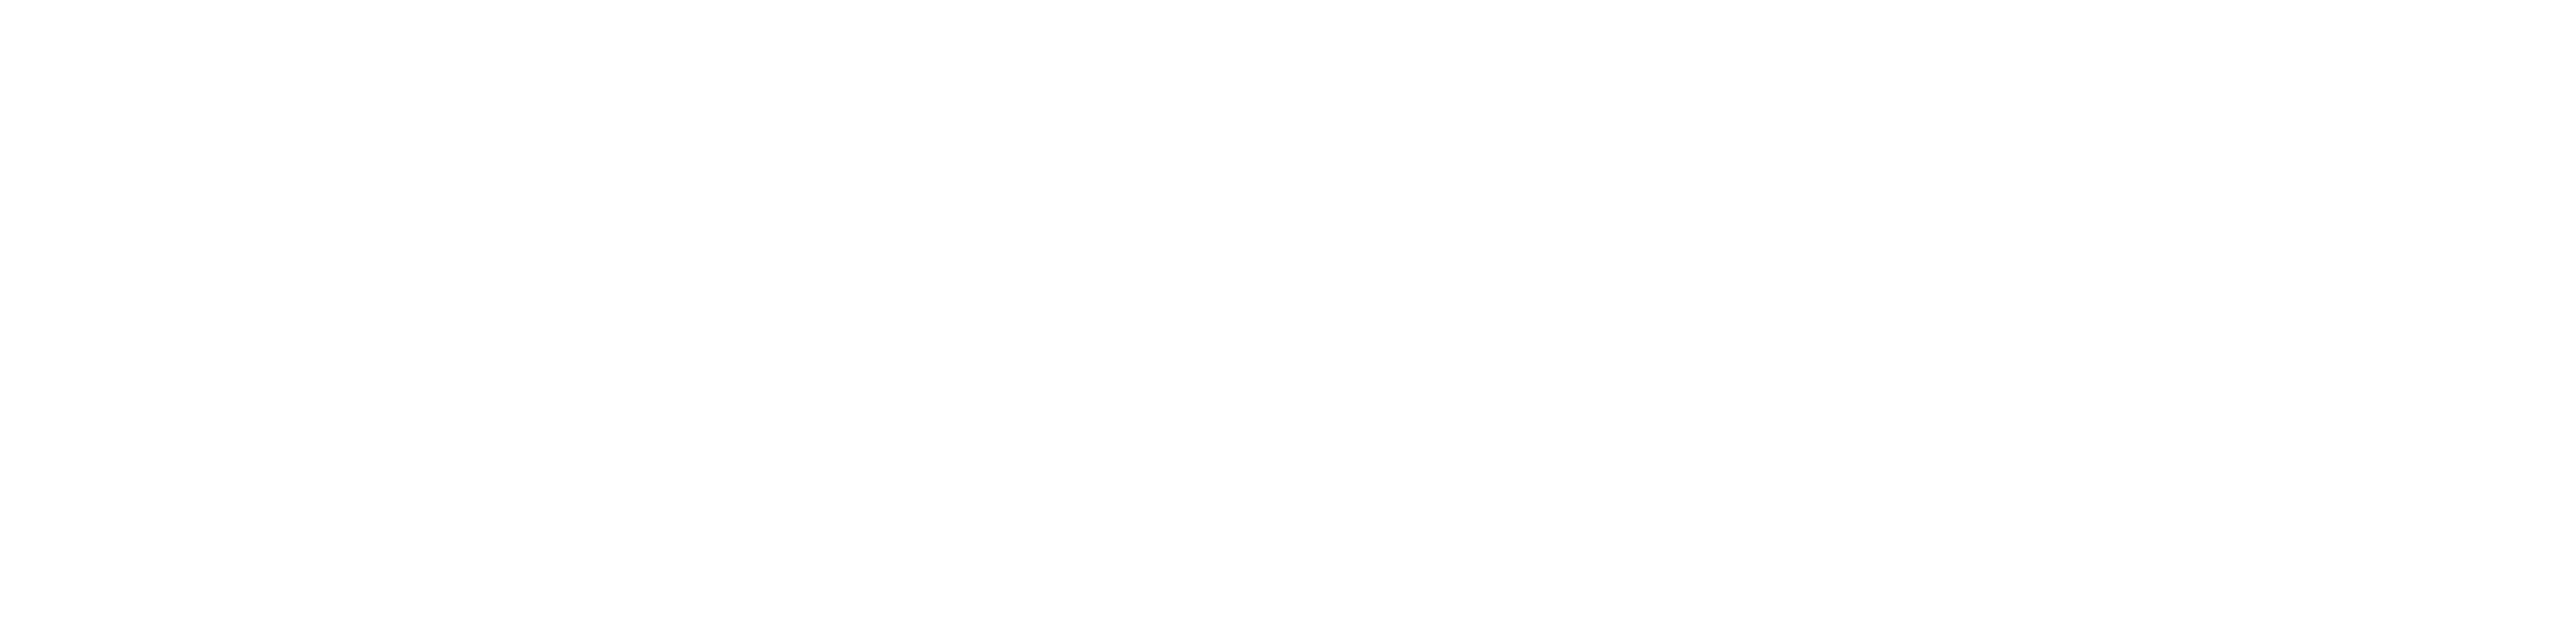 FREE SOUND Logo